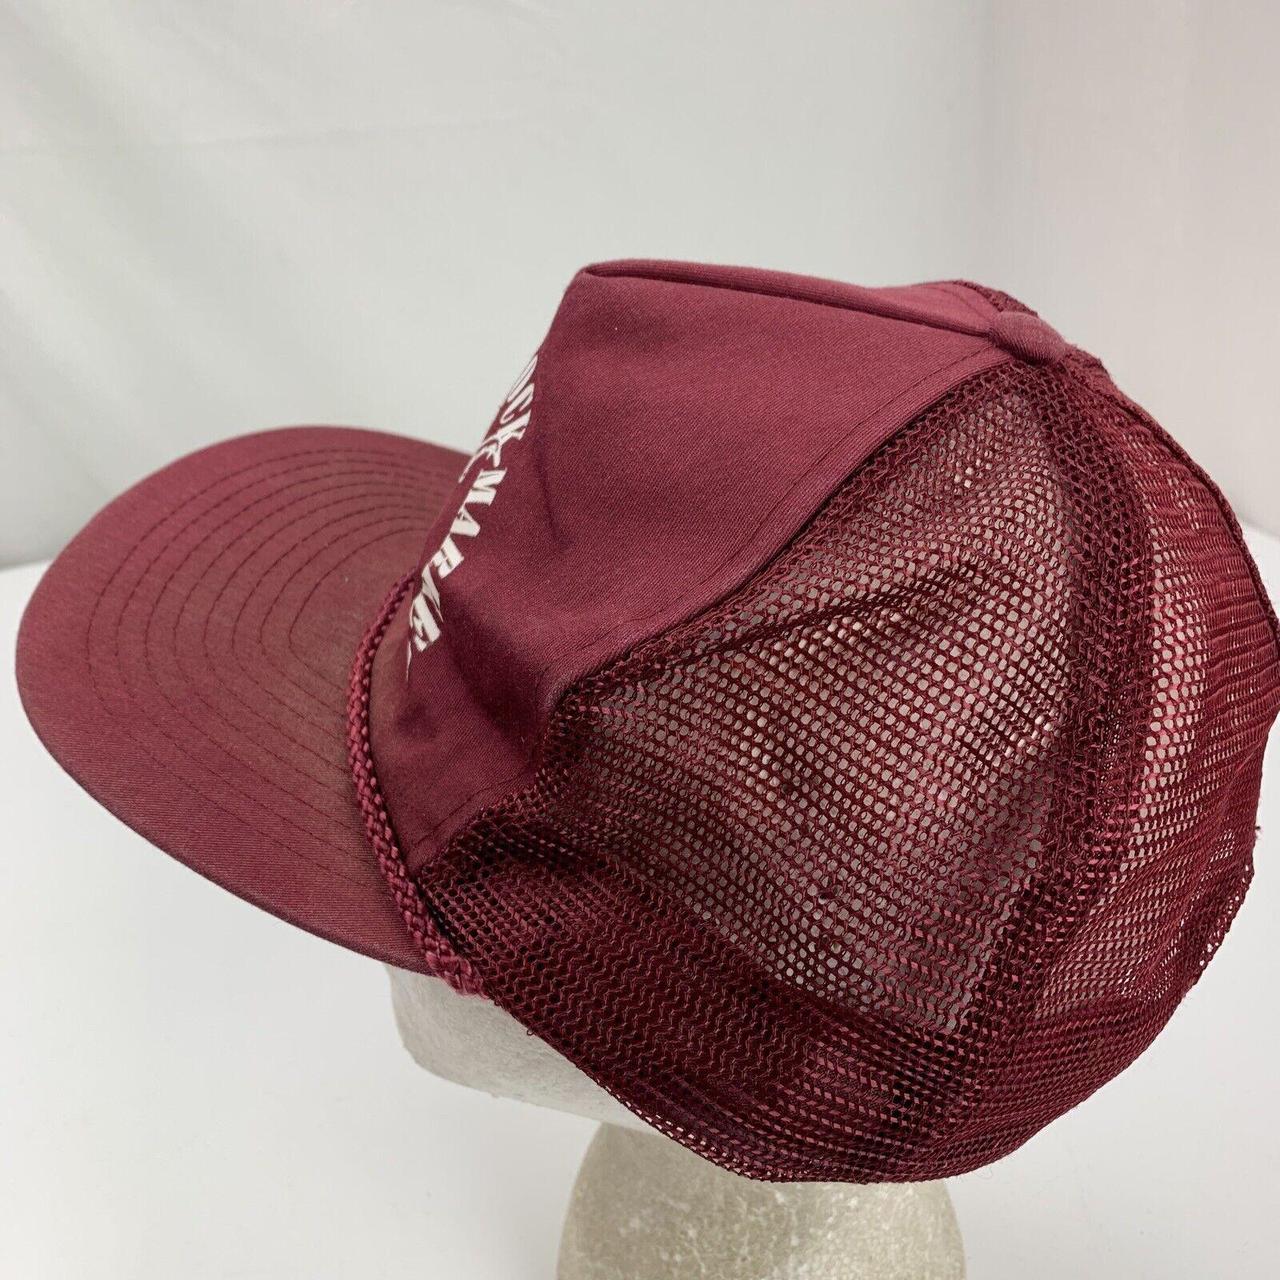 Market Men's Hat (2)